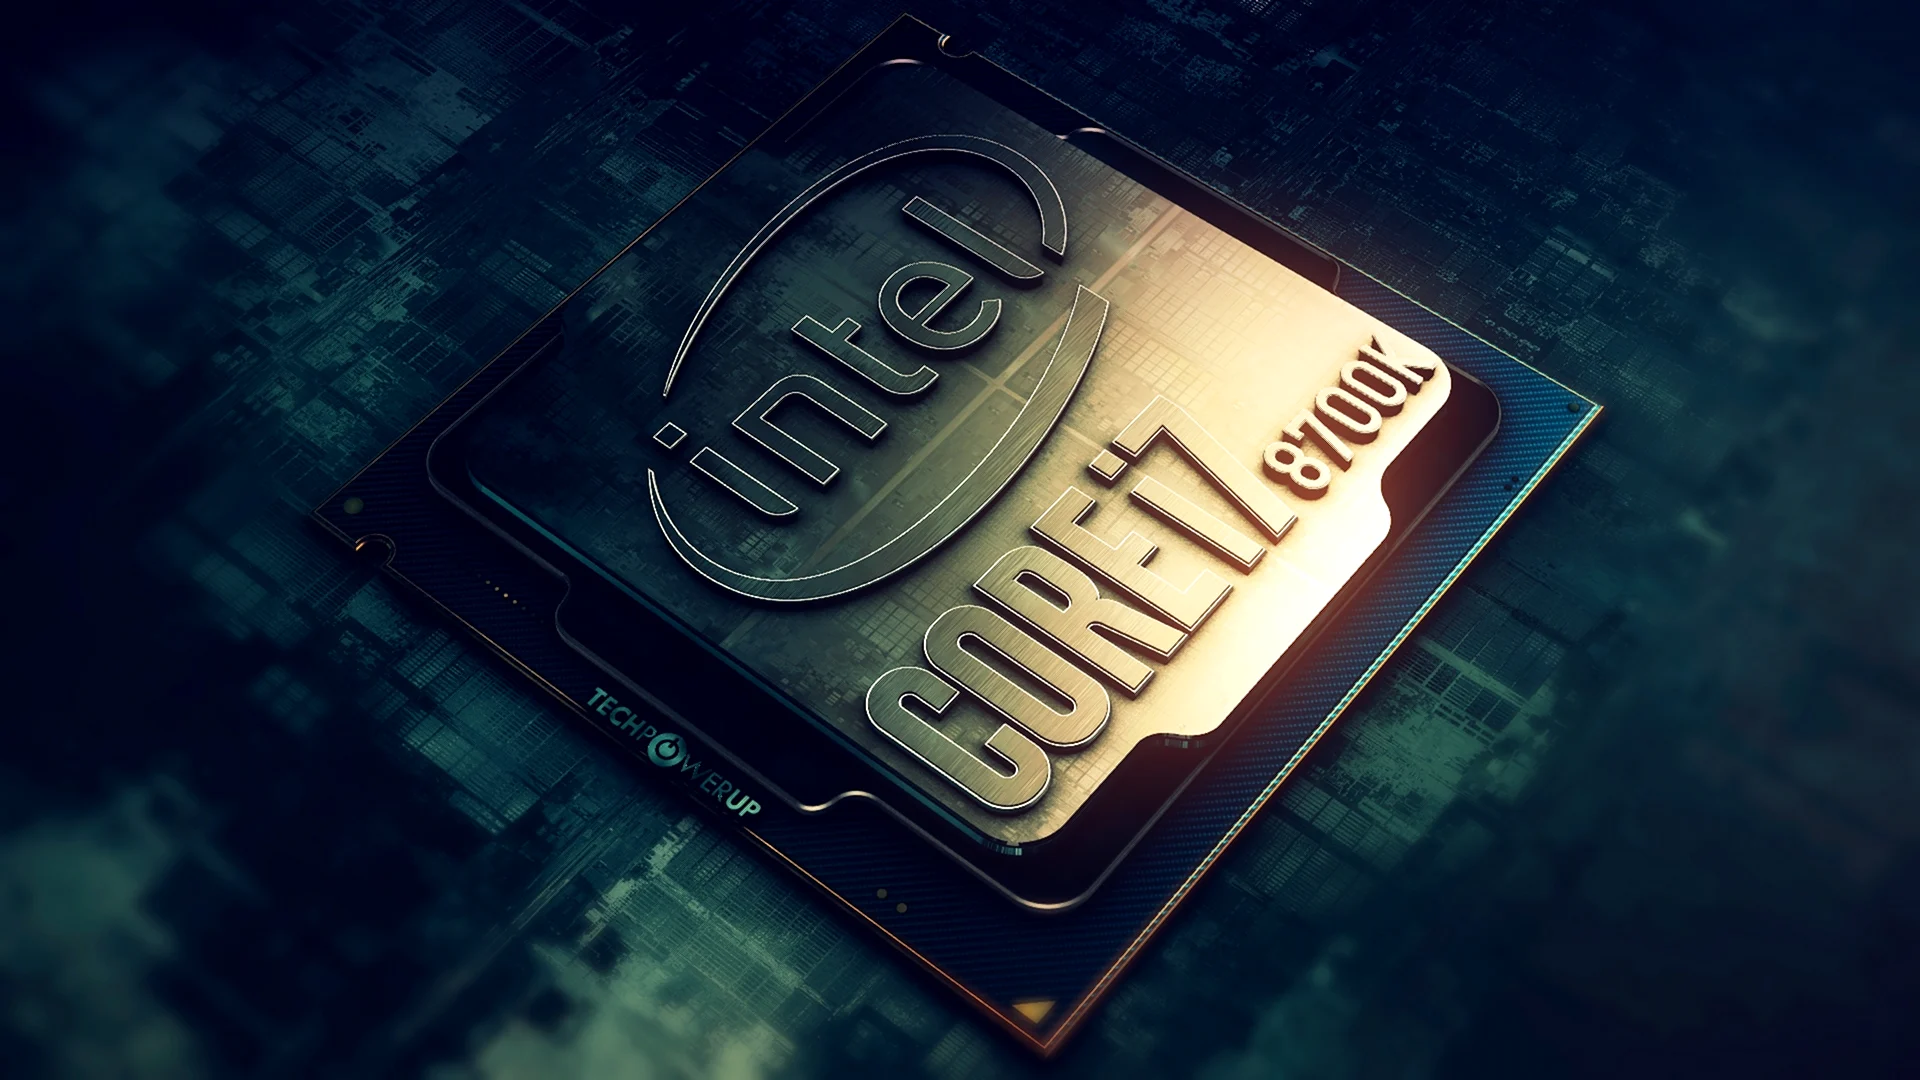 Intel Core i7